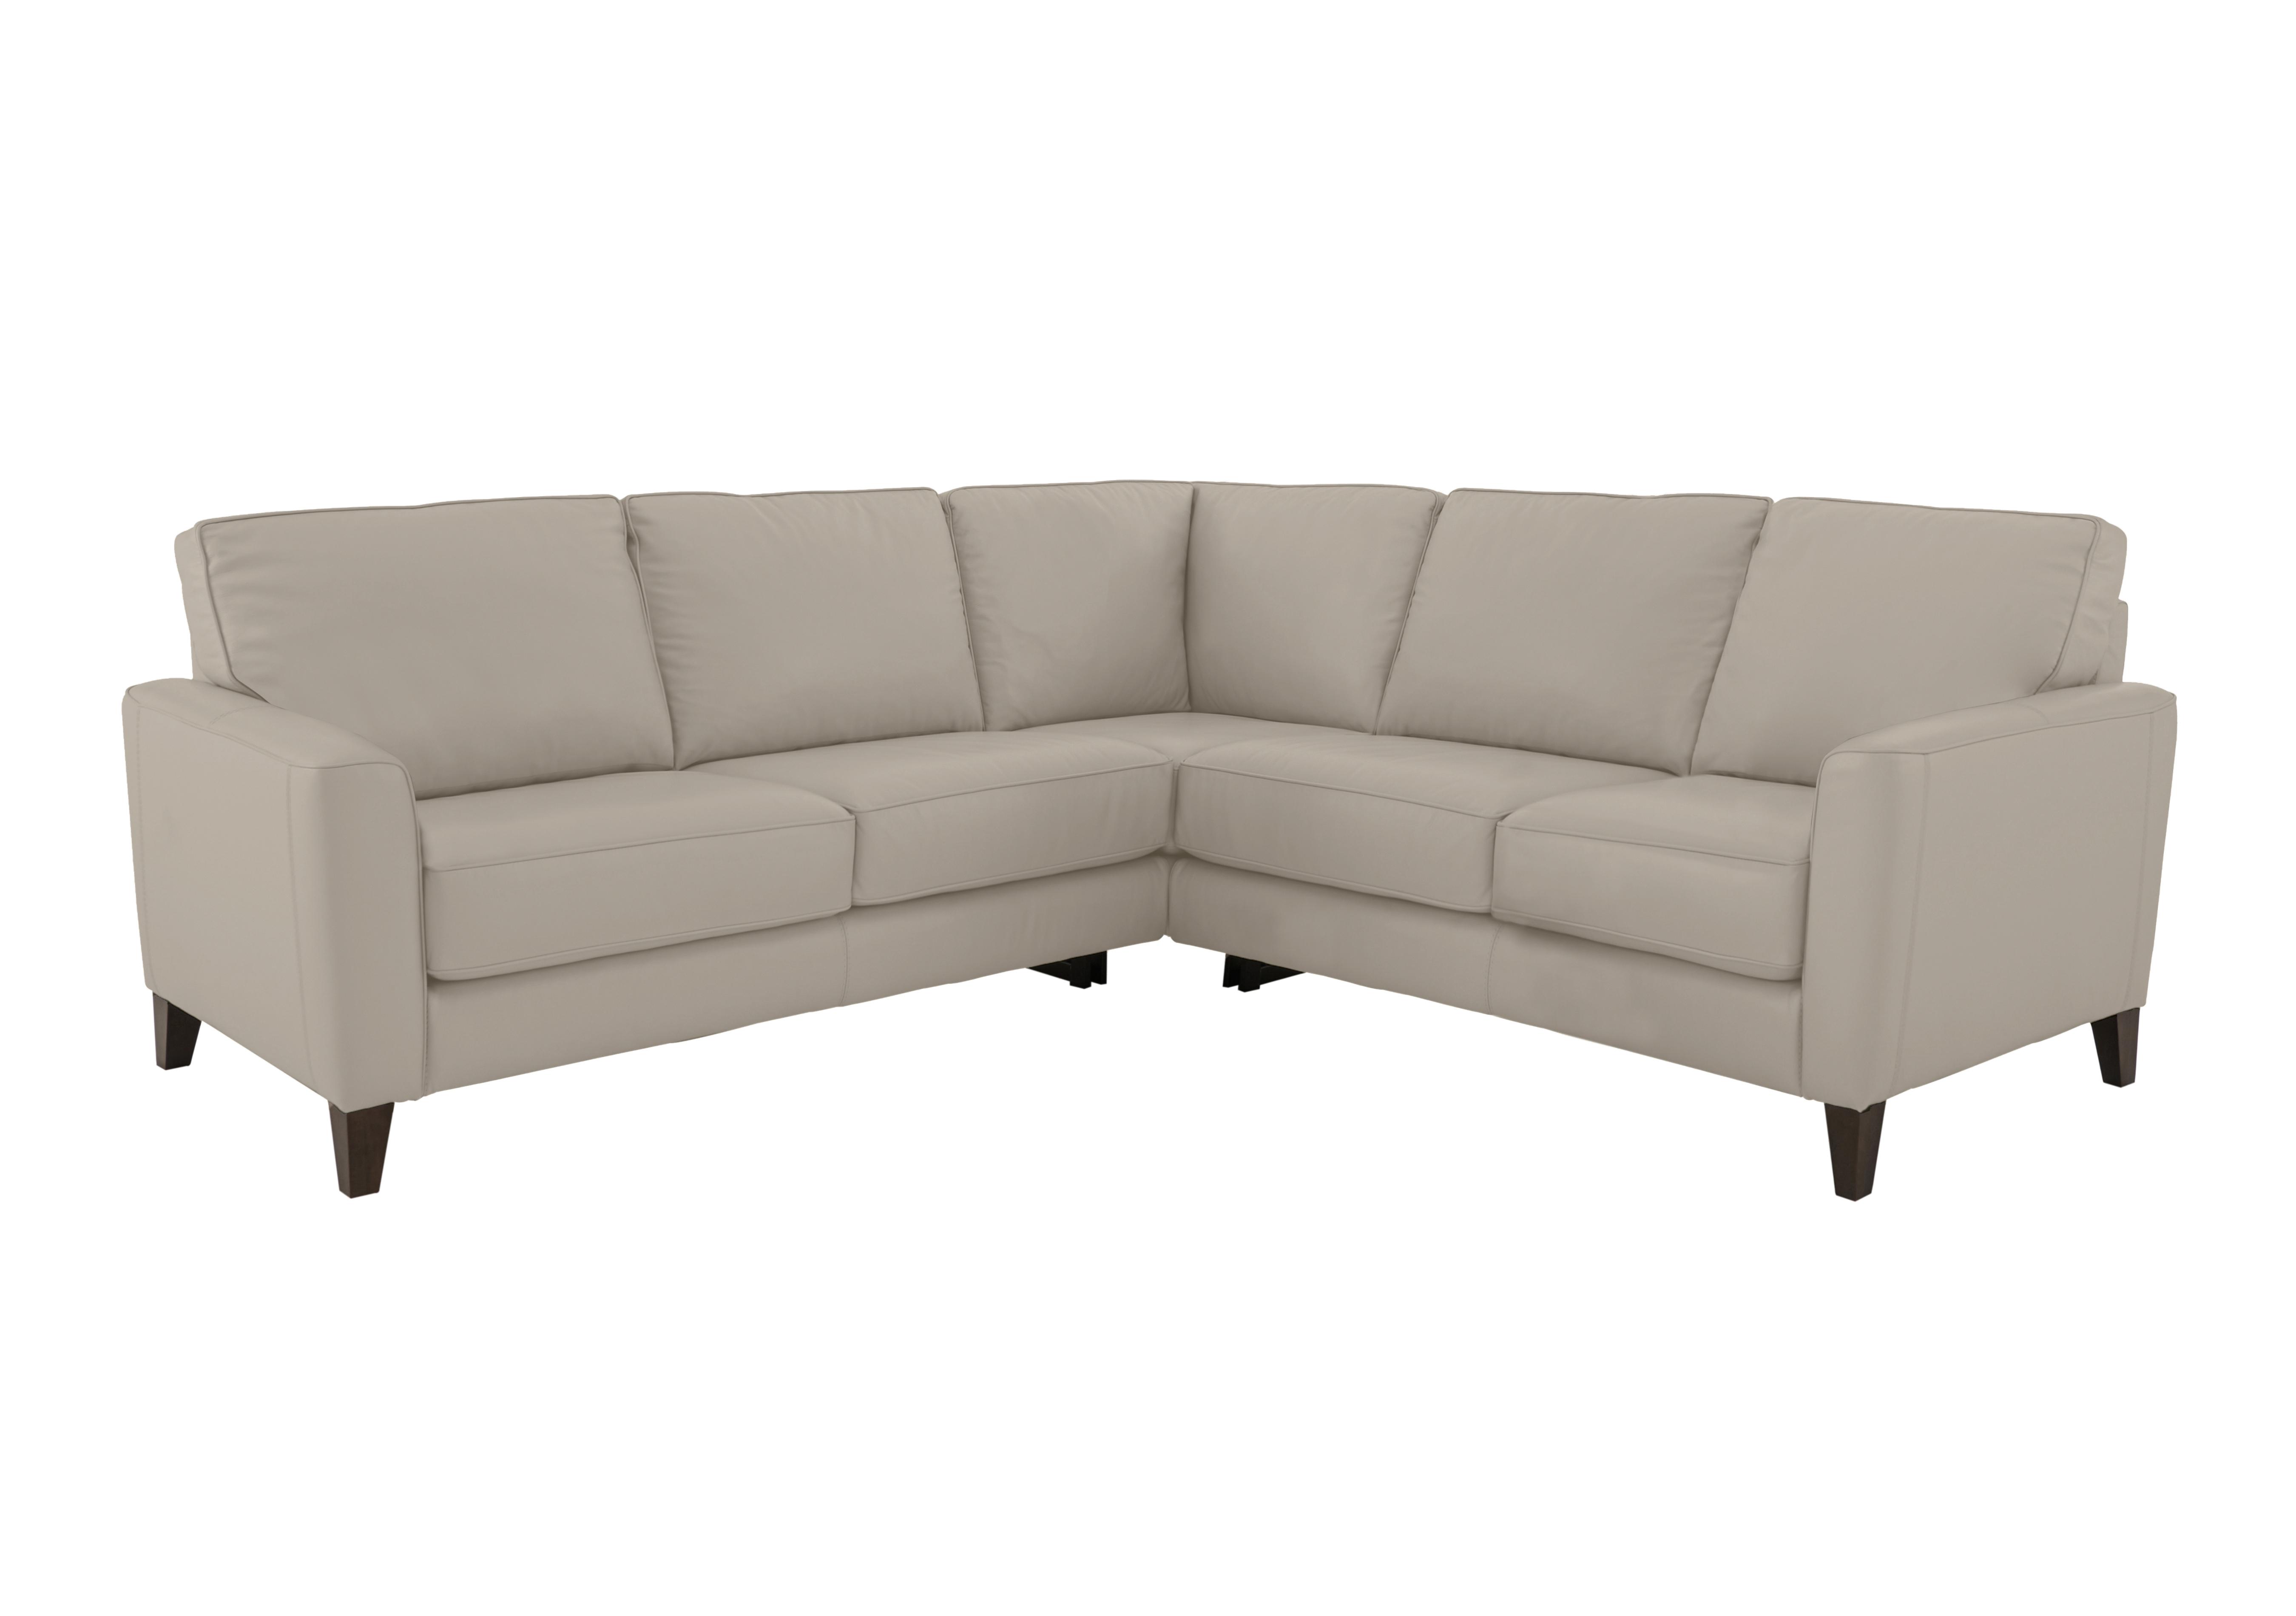 Brondby Large Leather Corner Sofa in Bv-946b Silver Grey on Furniture Village